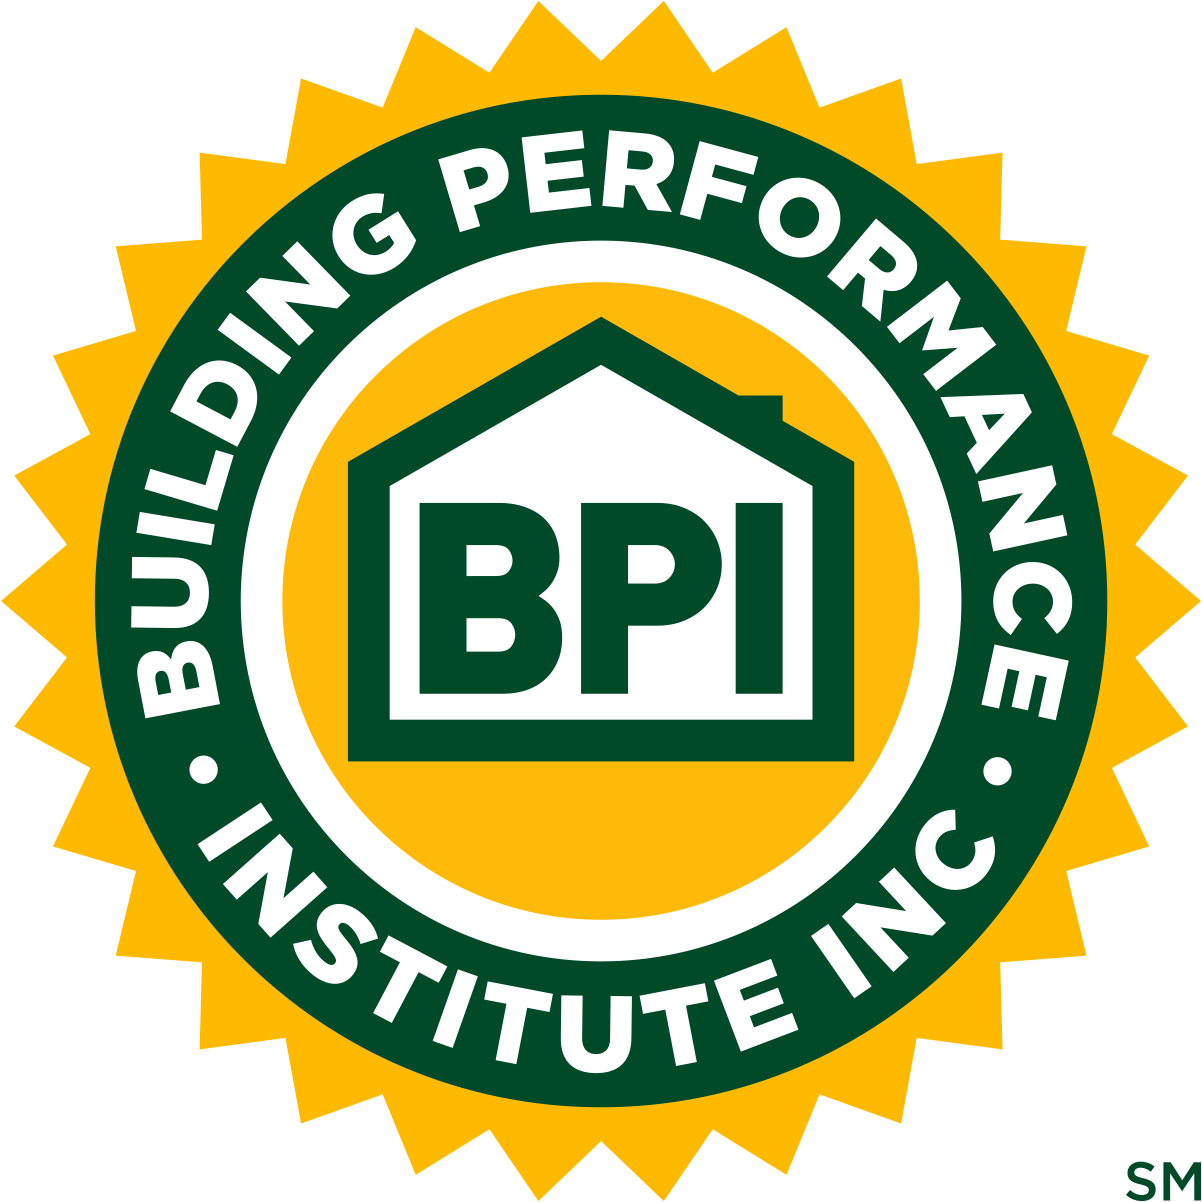 Engineering At North Carolina State University - Building Performance Institute Logo (1354x1350)